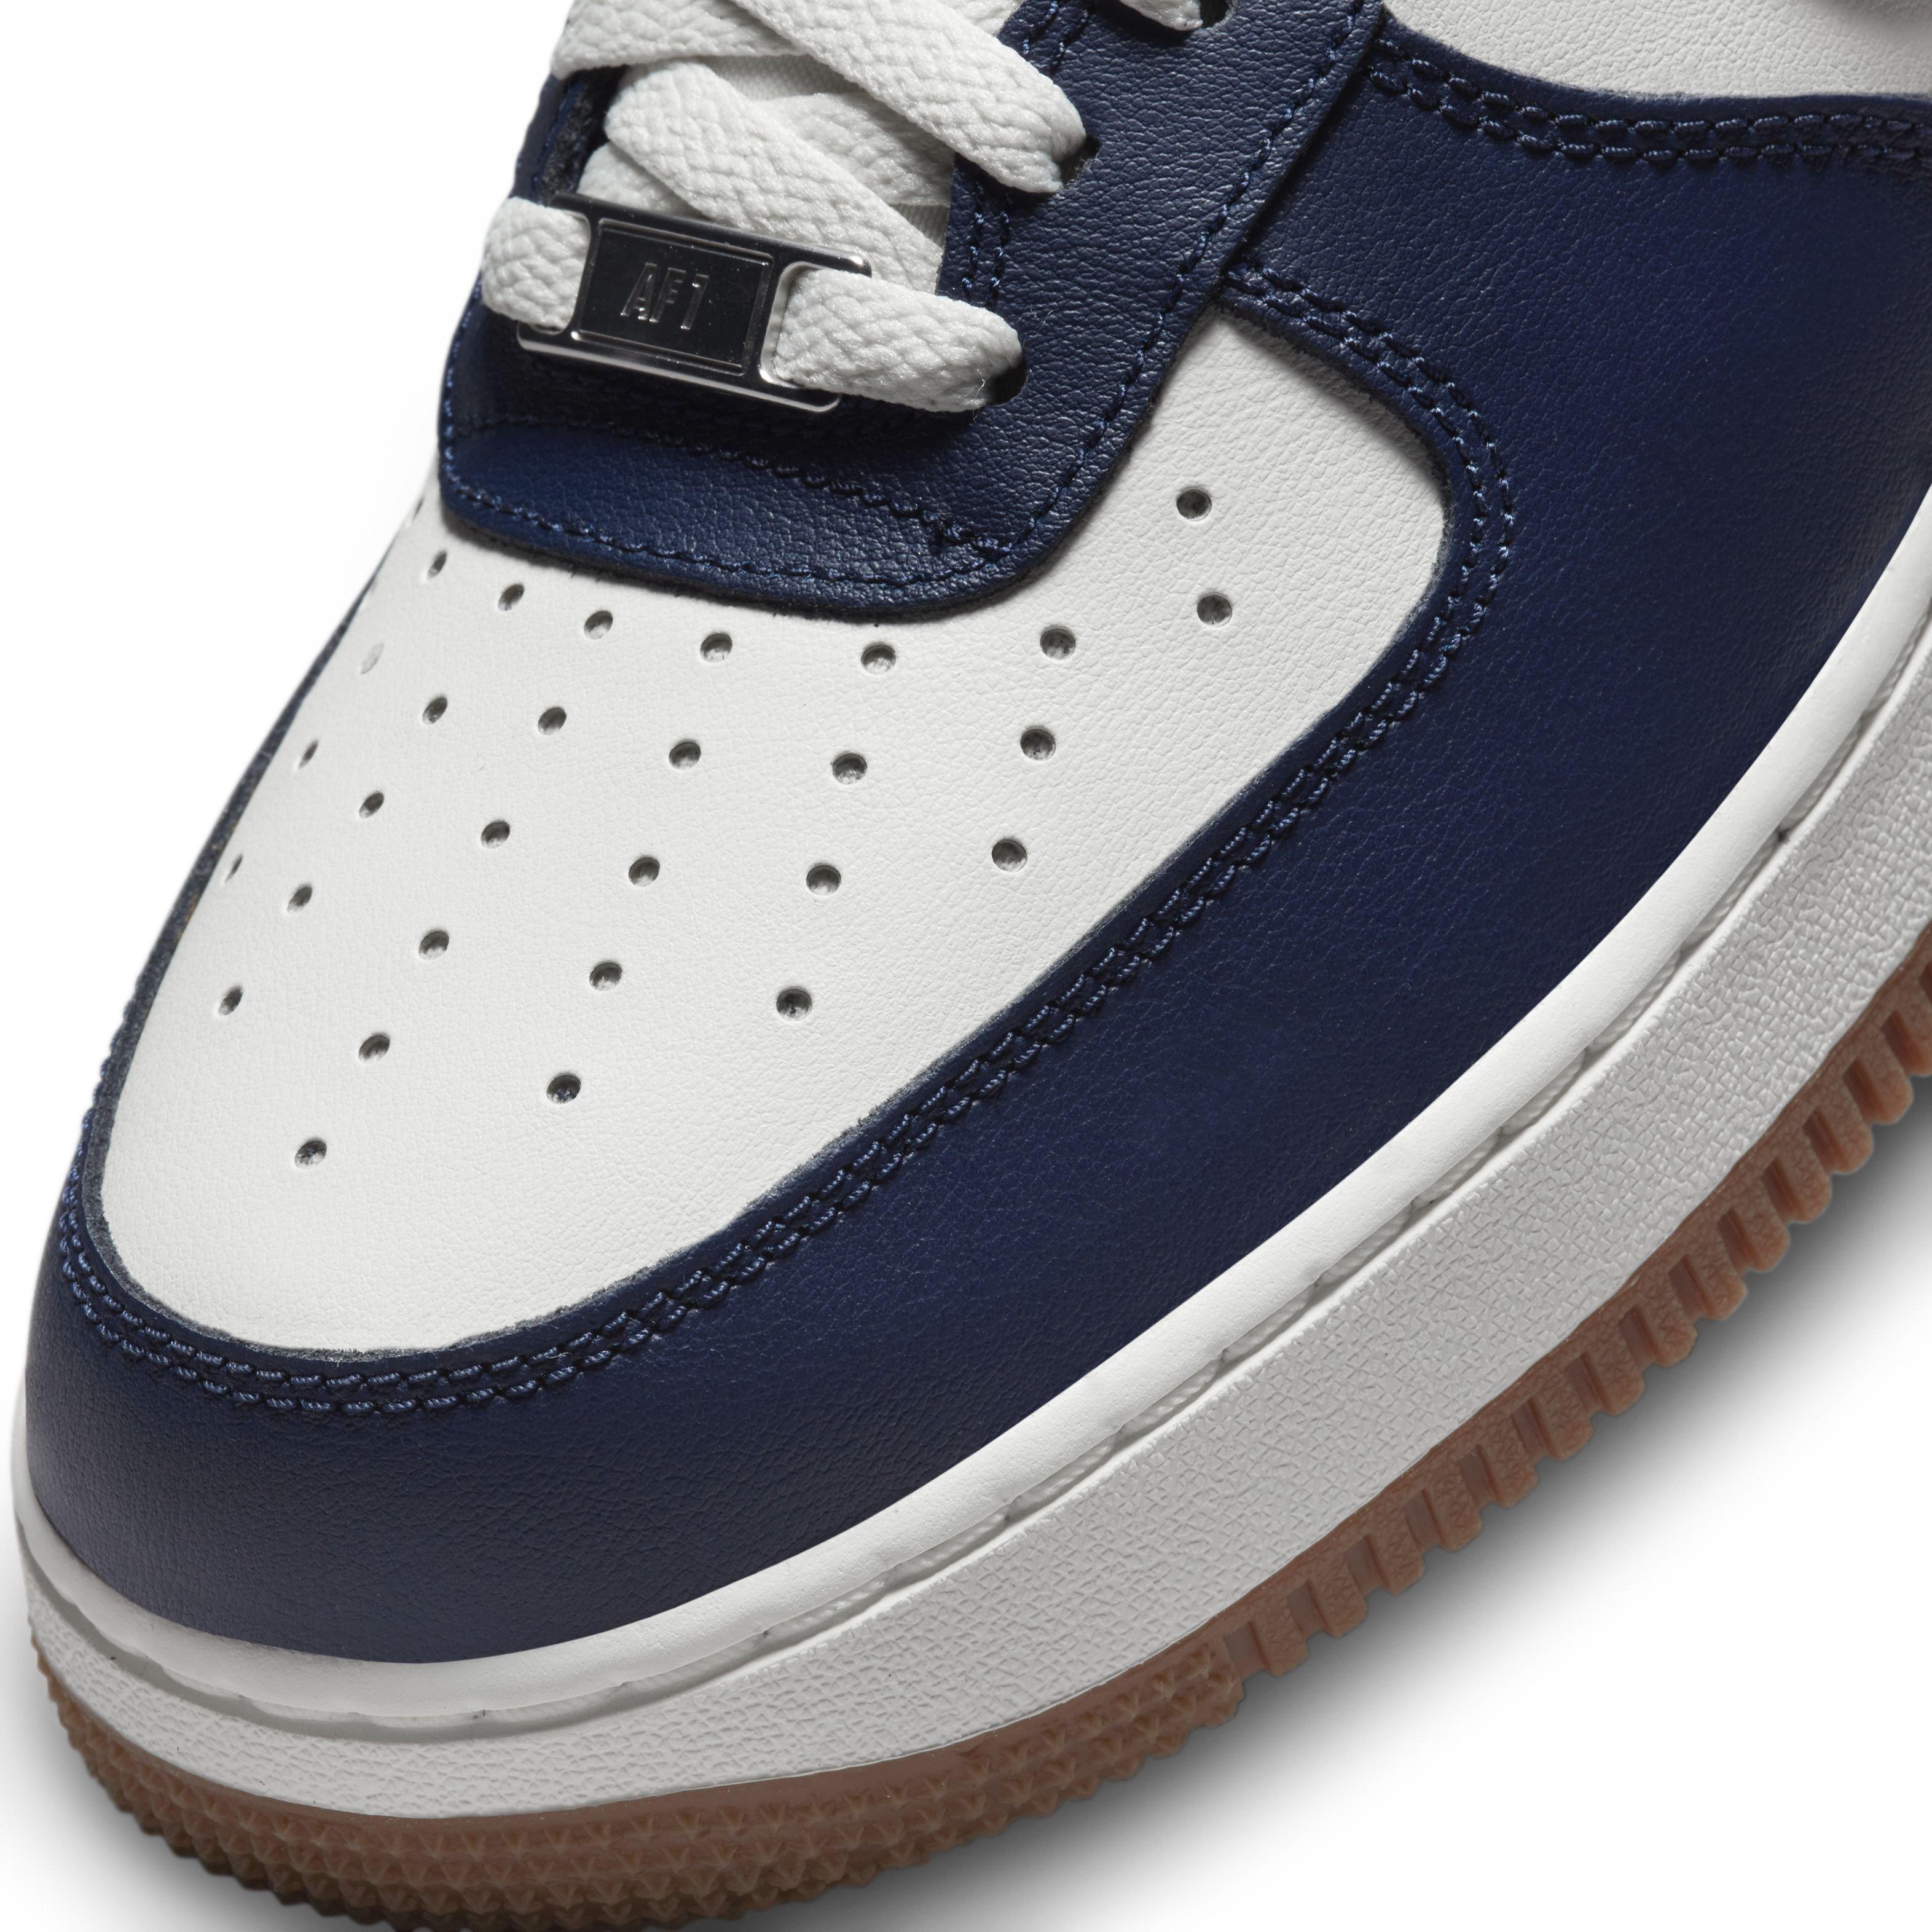 Nike Air 1 '07 LV8 "Sail/Midnight Navy/Gum Medium Men's Shoe